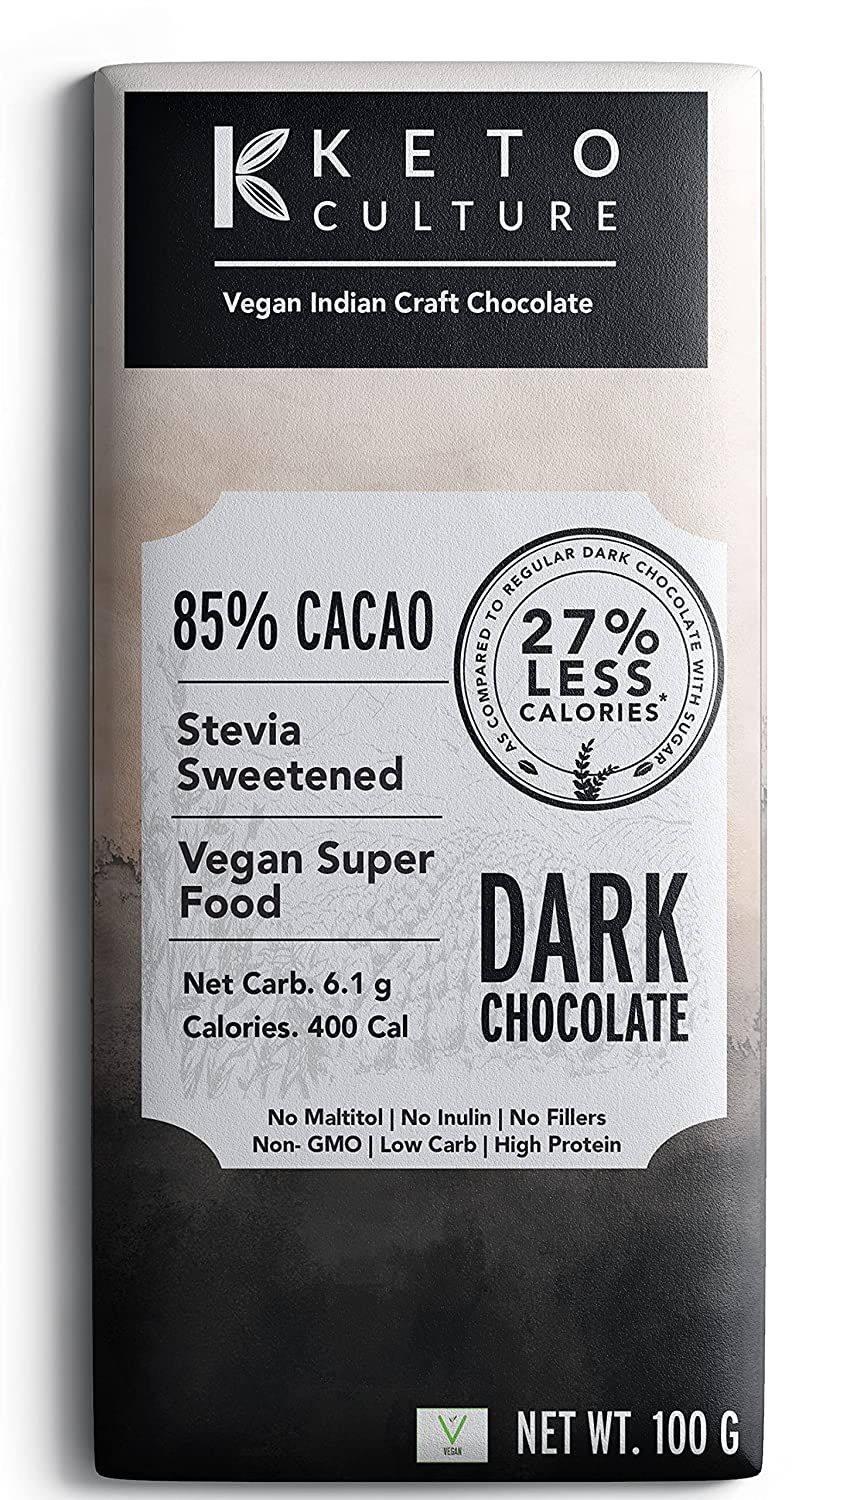 Keto Culture 85% Cacao Vegan Dark Chocolate Image